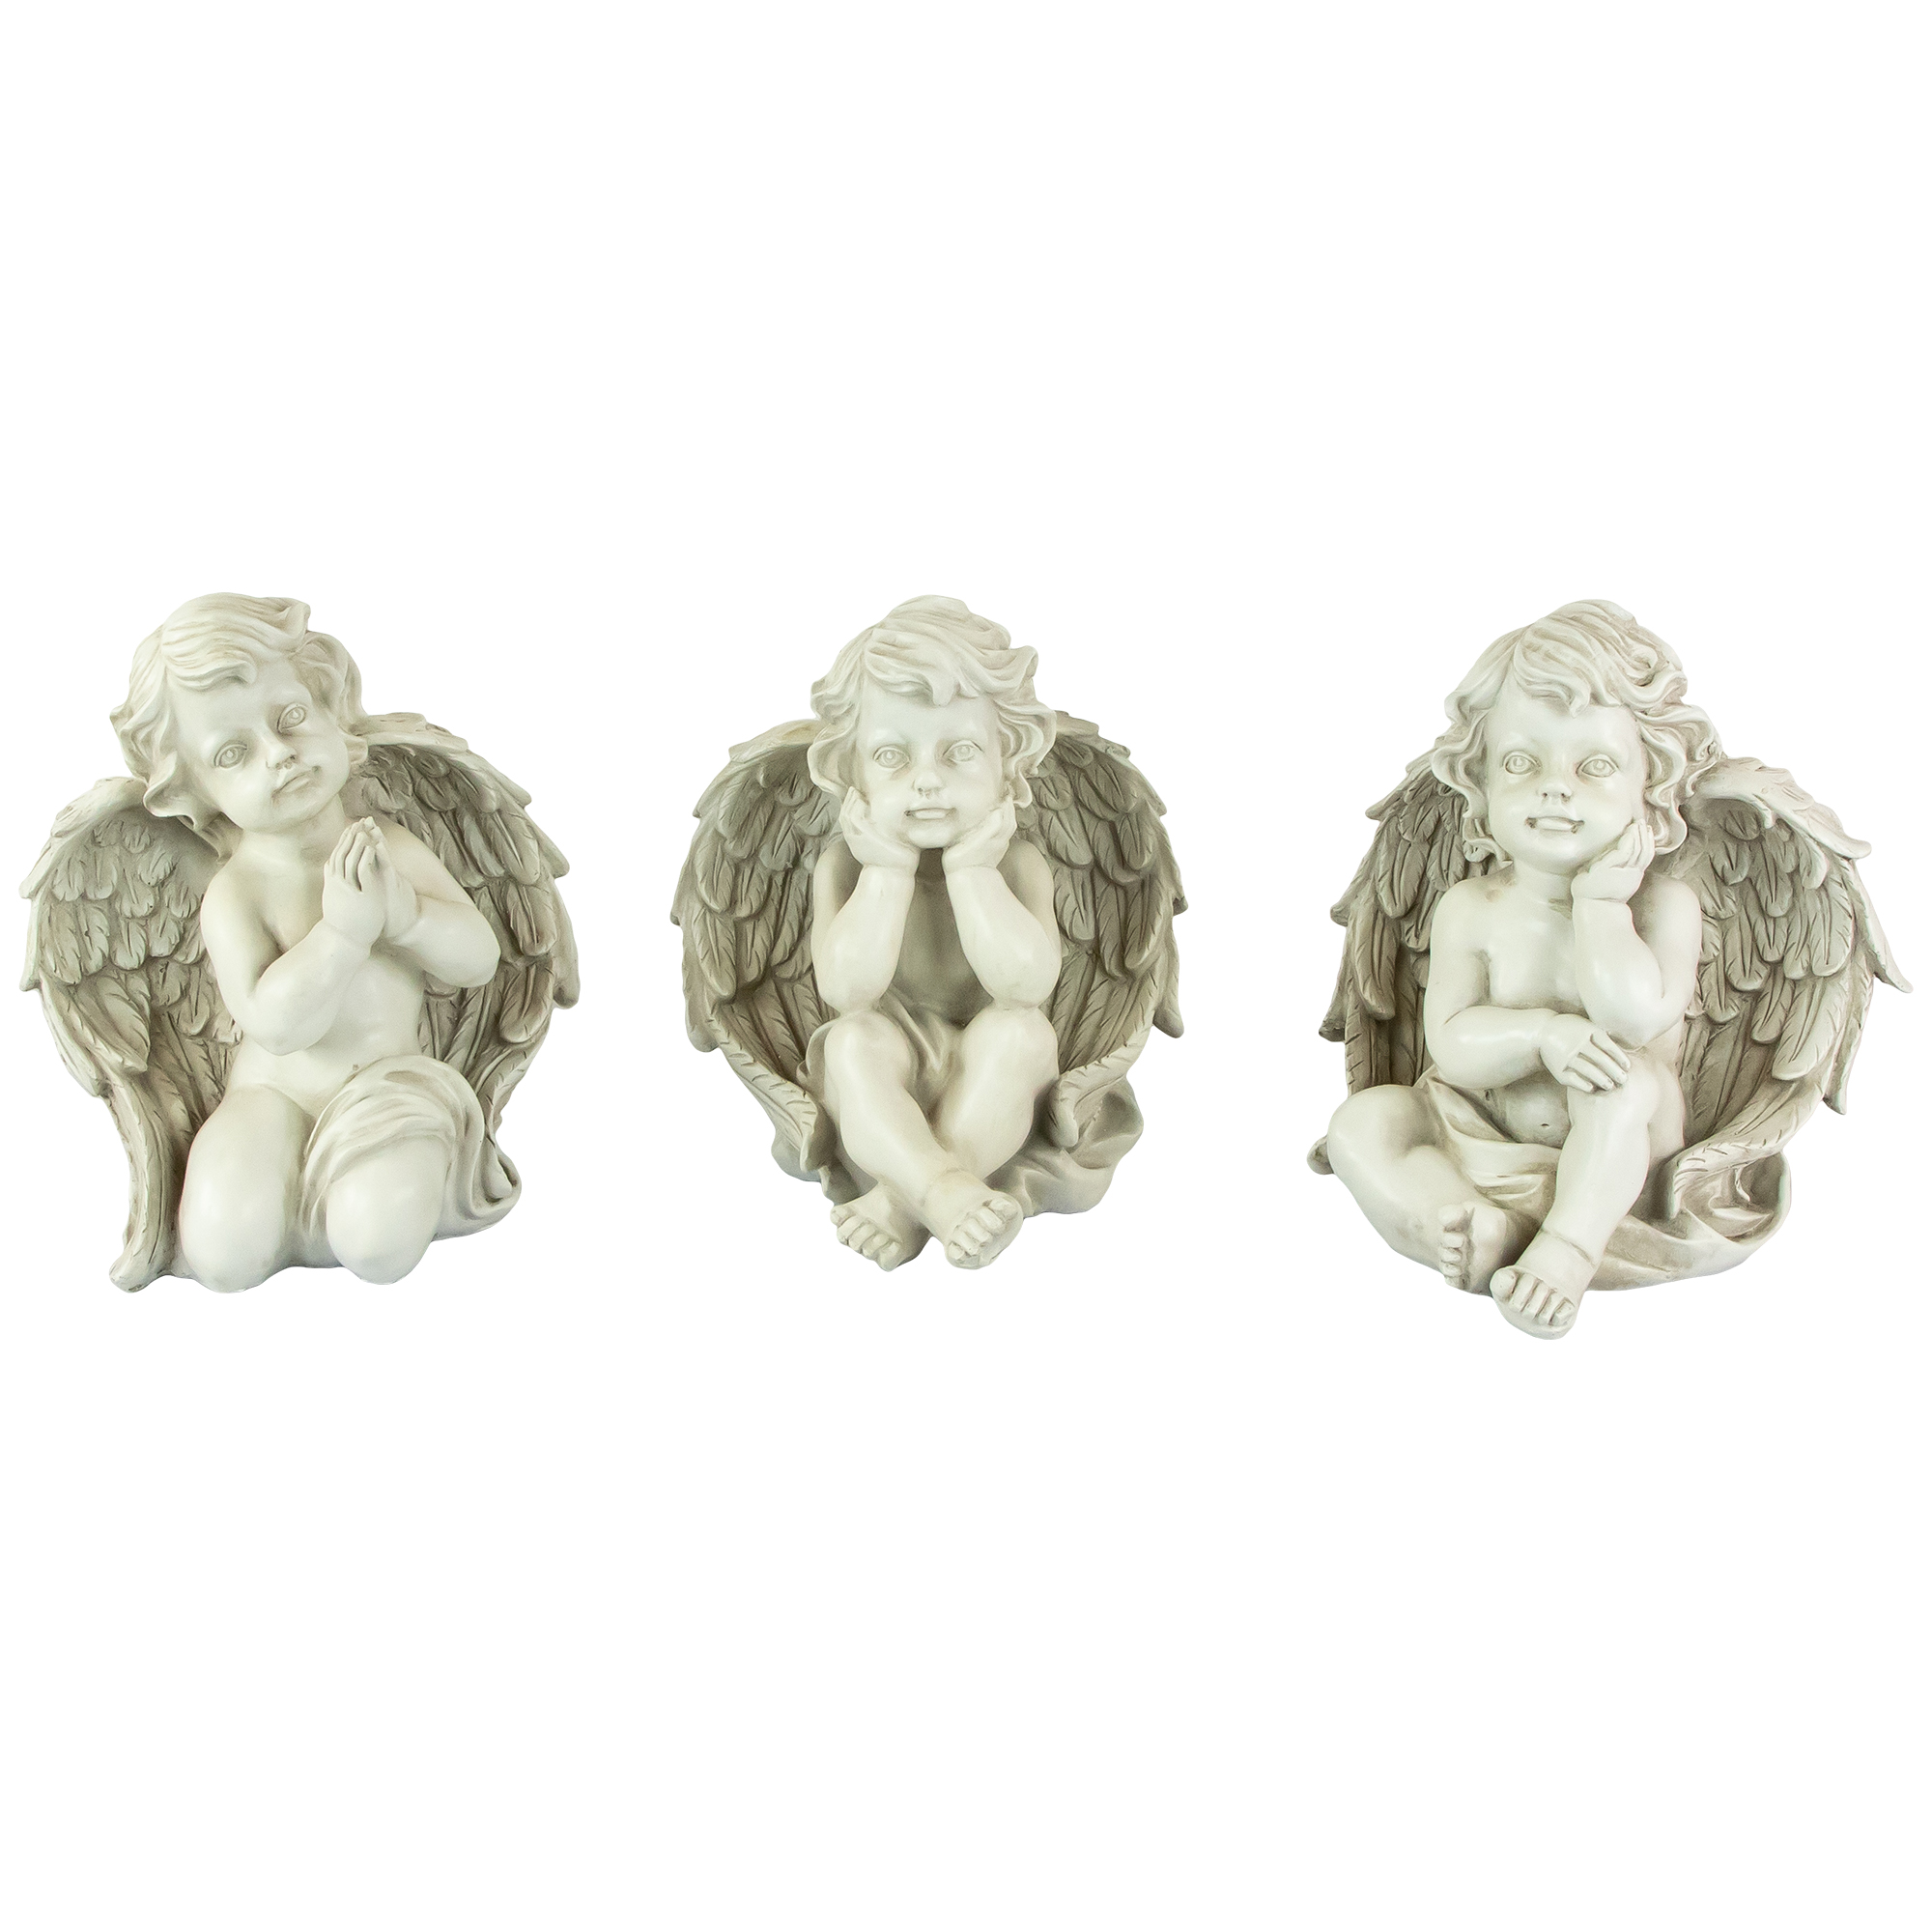 Northlight Set of 3 Sitting Cherub Angel Outdoor Patio Garden Statues 11" - White - image 1 of 4